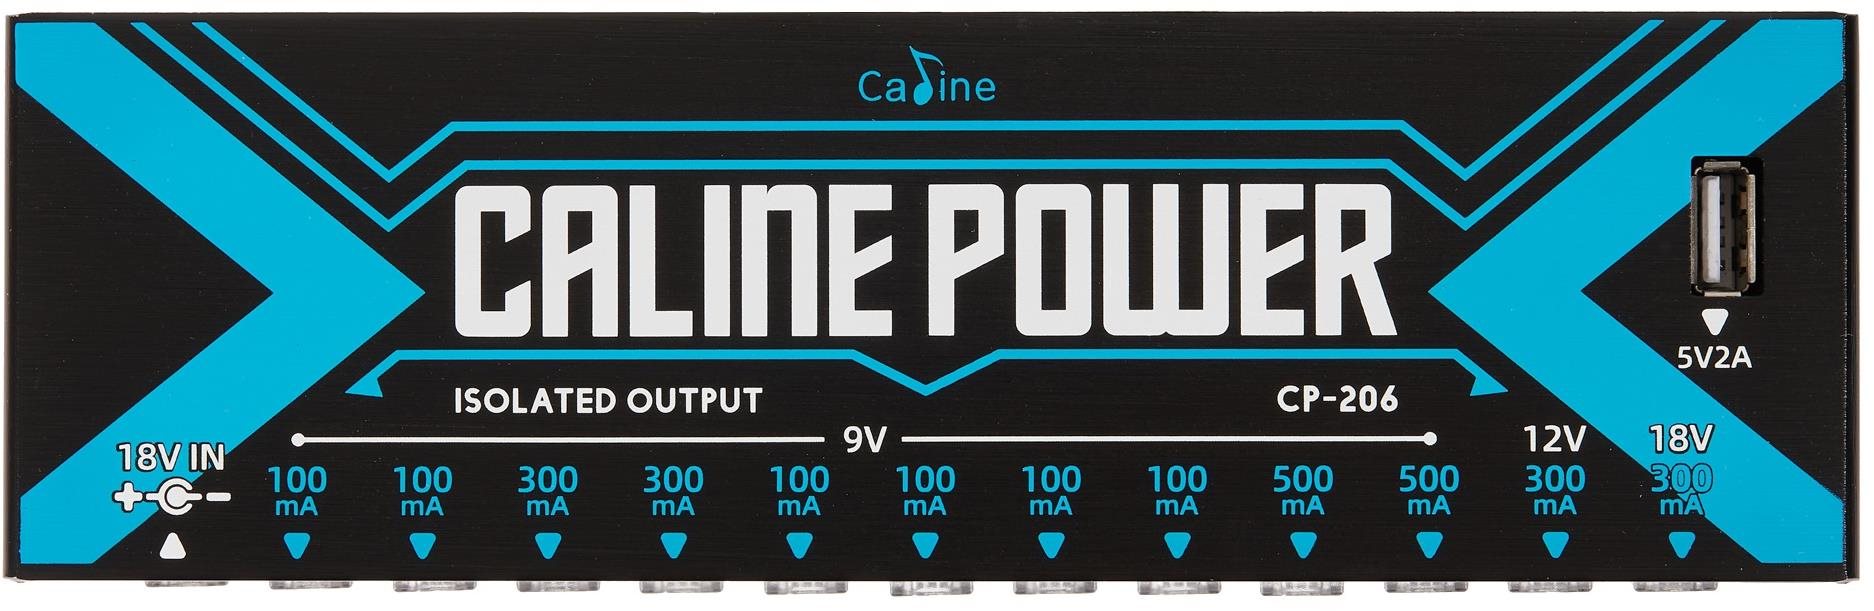 CALINE CP-206